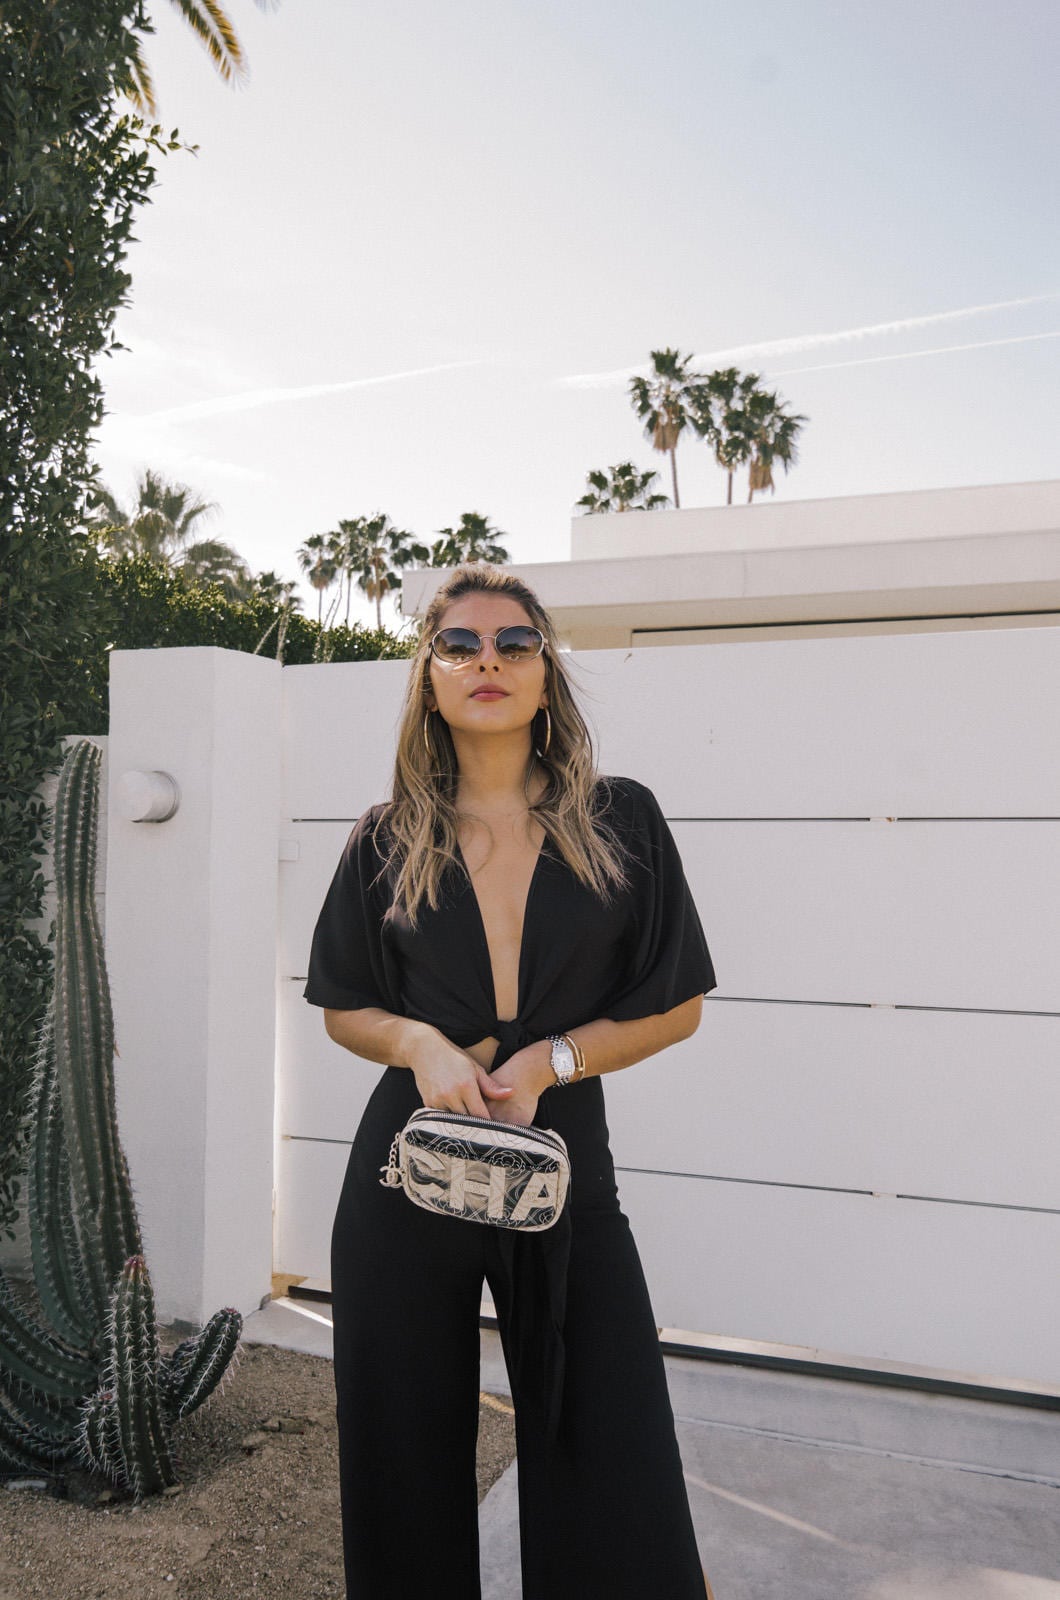 Chanel Black and White Bag, The Camera Handbag, Chanel quilted camera bag, Pat Hetlinger Coachella Style, Pam Hetlinger Outfits | TheGirlFromPanama.com